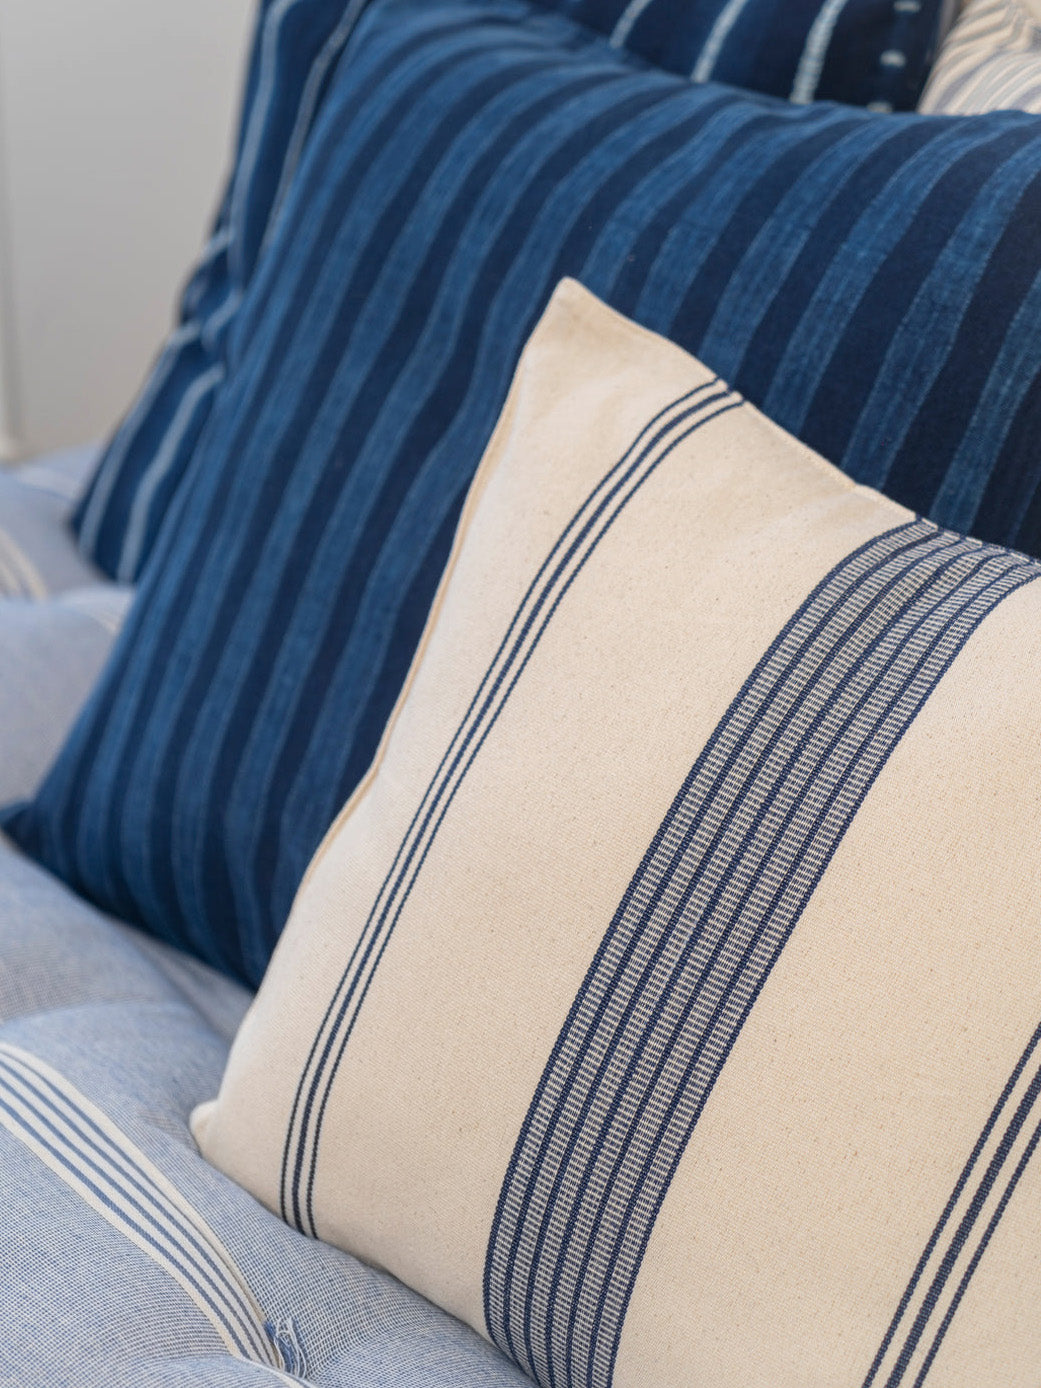 Cushion cover no 8 navy stripes, 50 x 50 cm